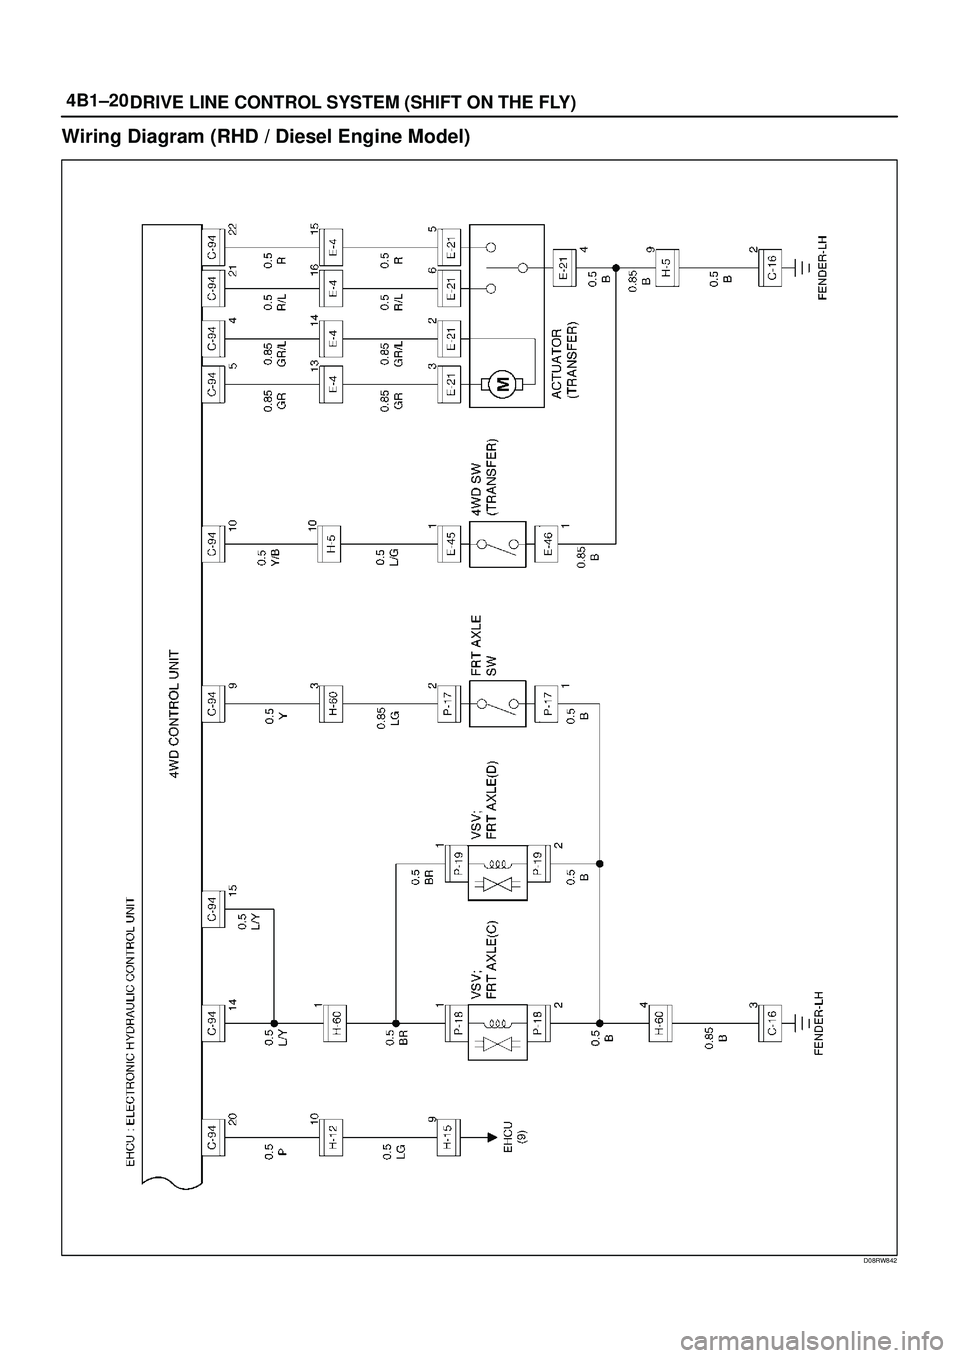 ISUZU TROOPER 1998  Service Repair Manual 4B1±20
DRIVE LINE CONTROL SYSTEM (SHIFT ON THE FLY)
Wiring Diagram (RHD / Diesel Engine Model)
D08RW842 